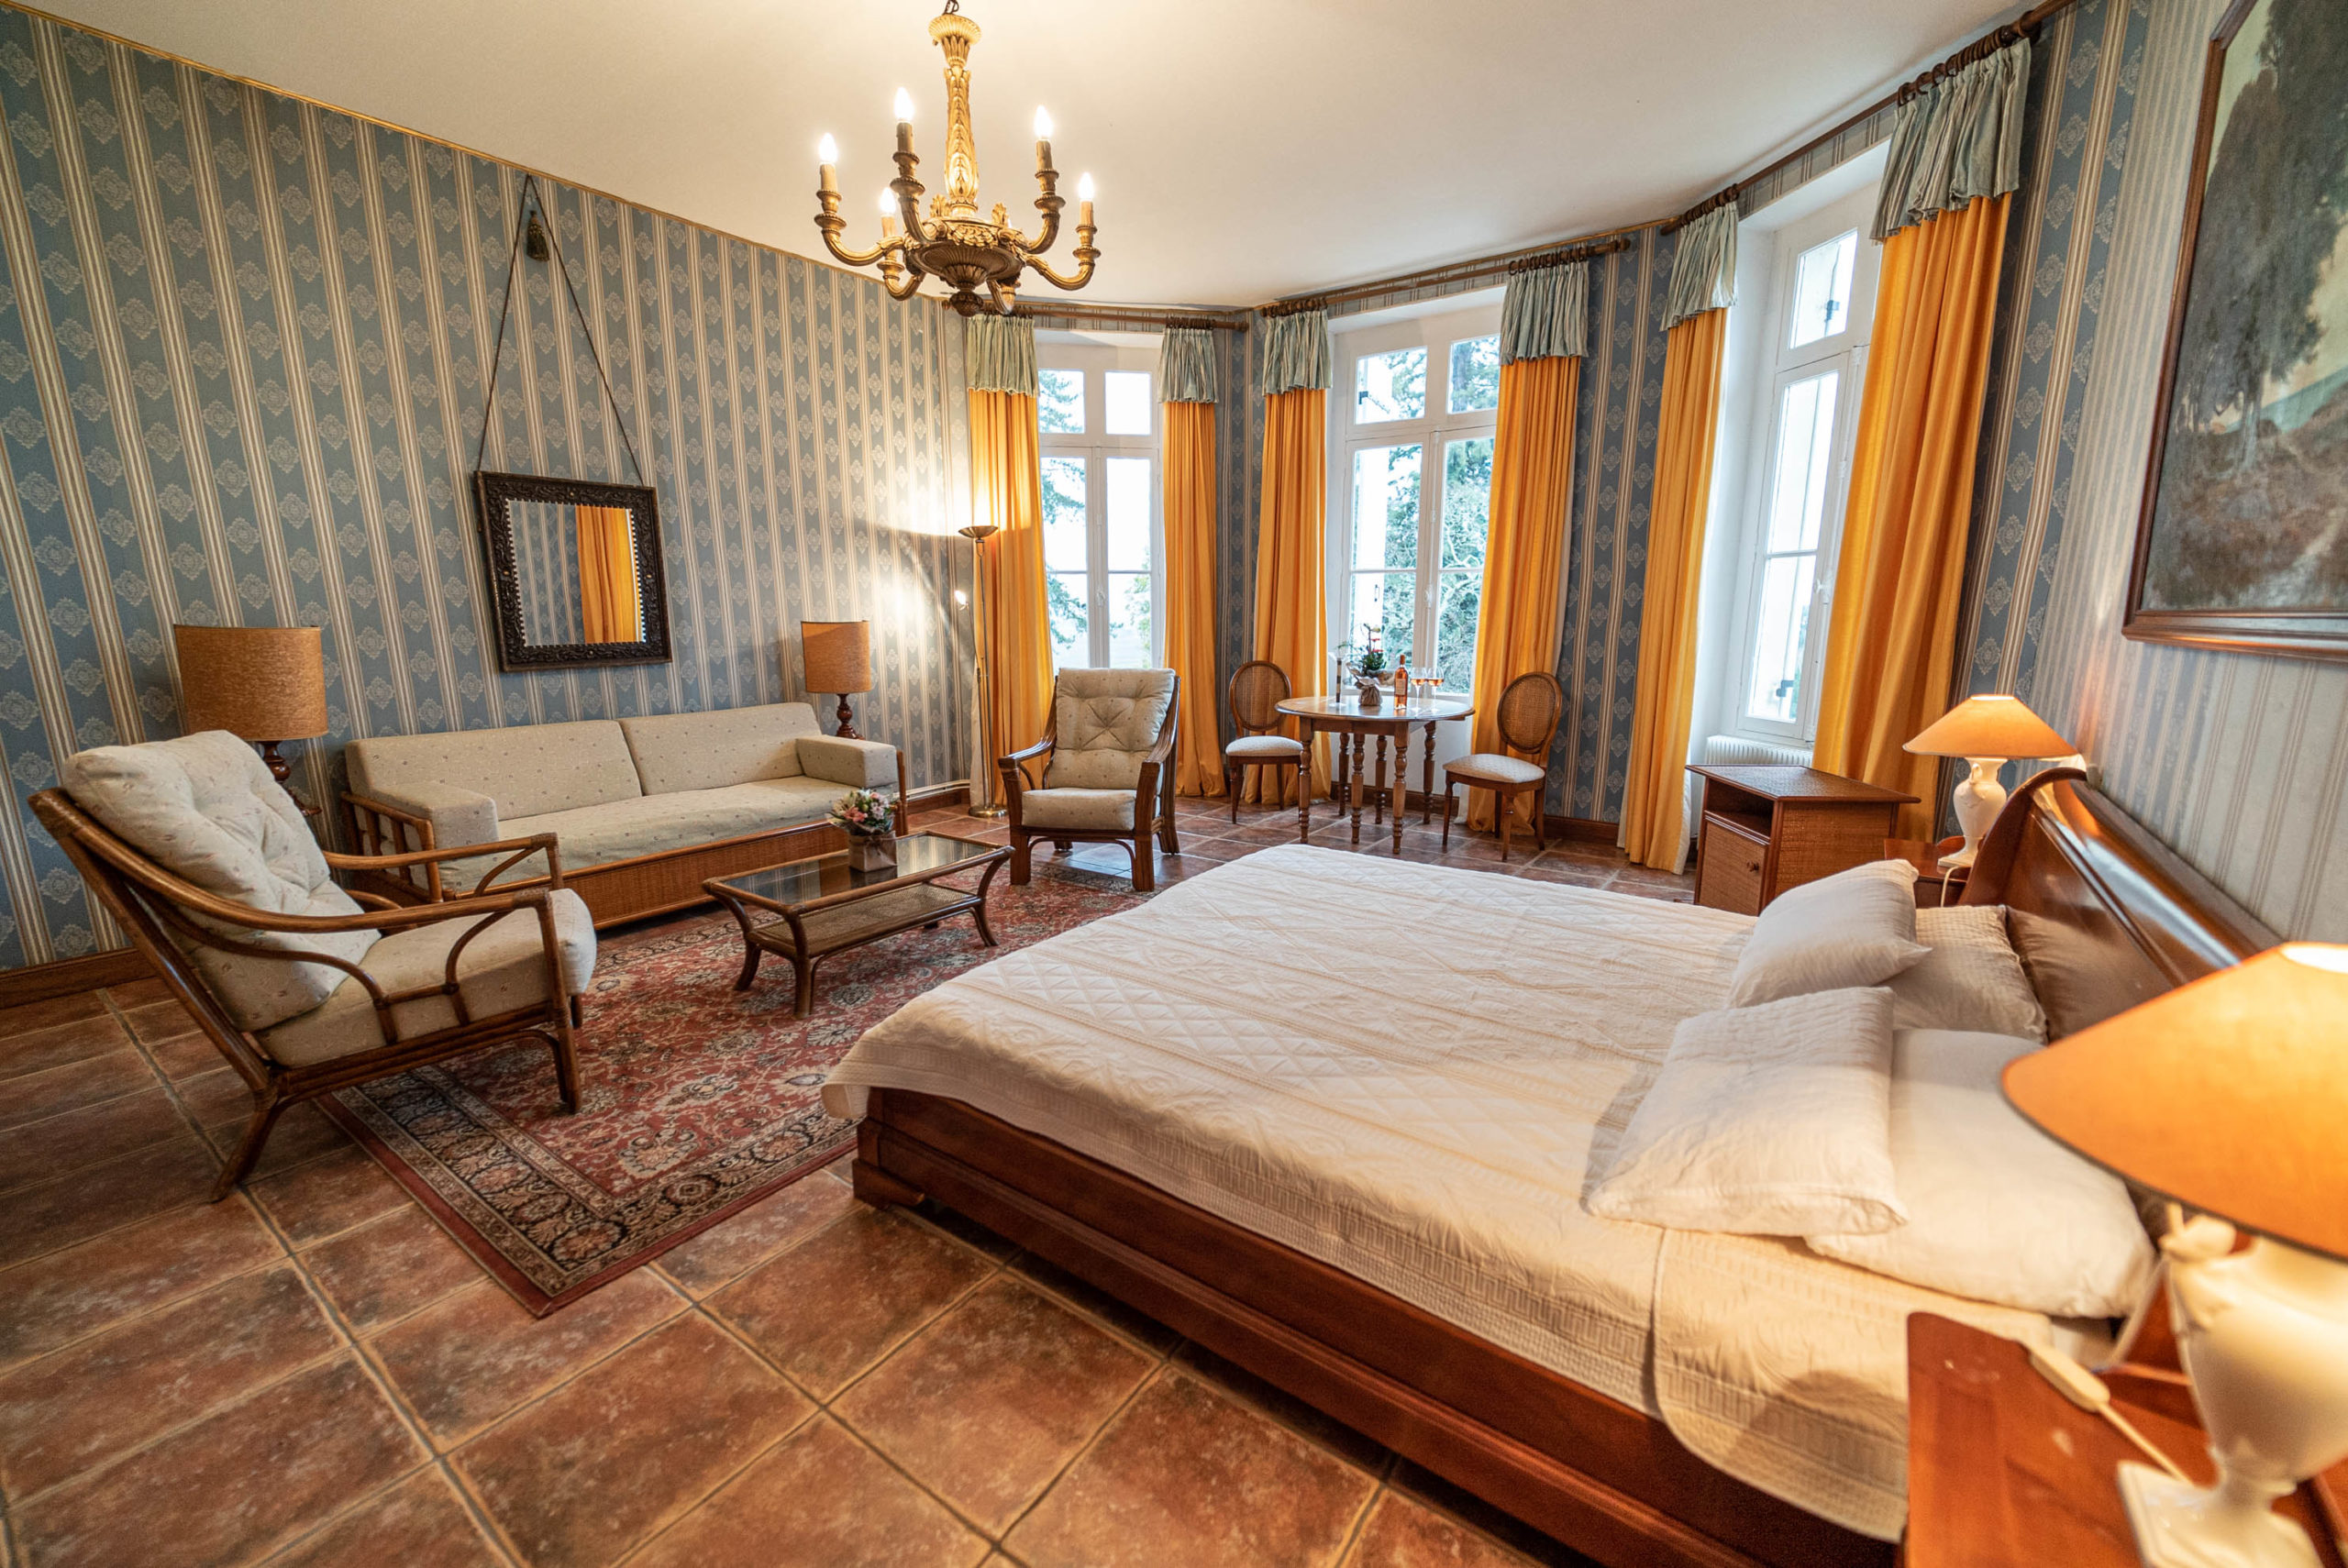 Suite du marquis chambre chateau Rauly location bergerac Monbazillac